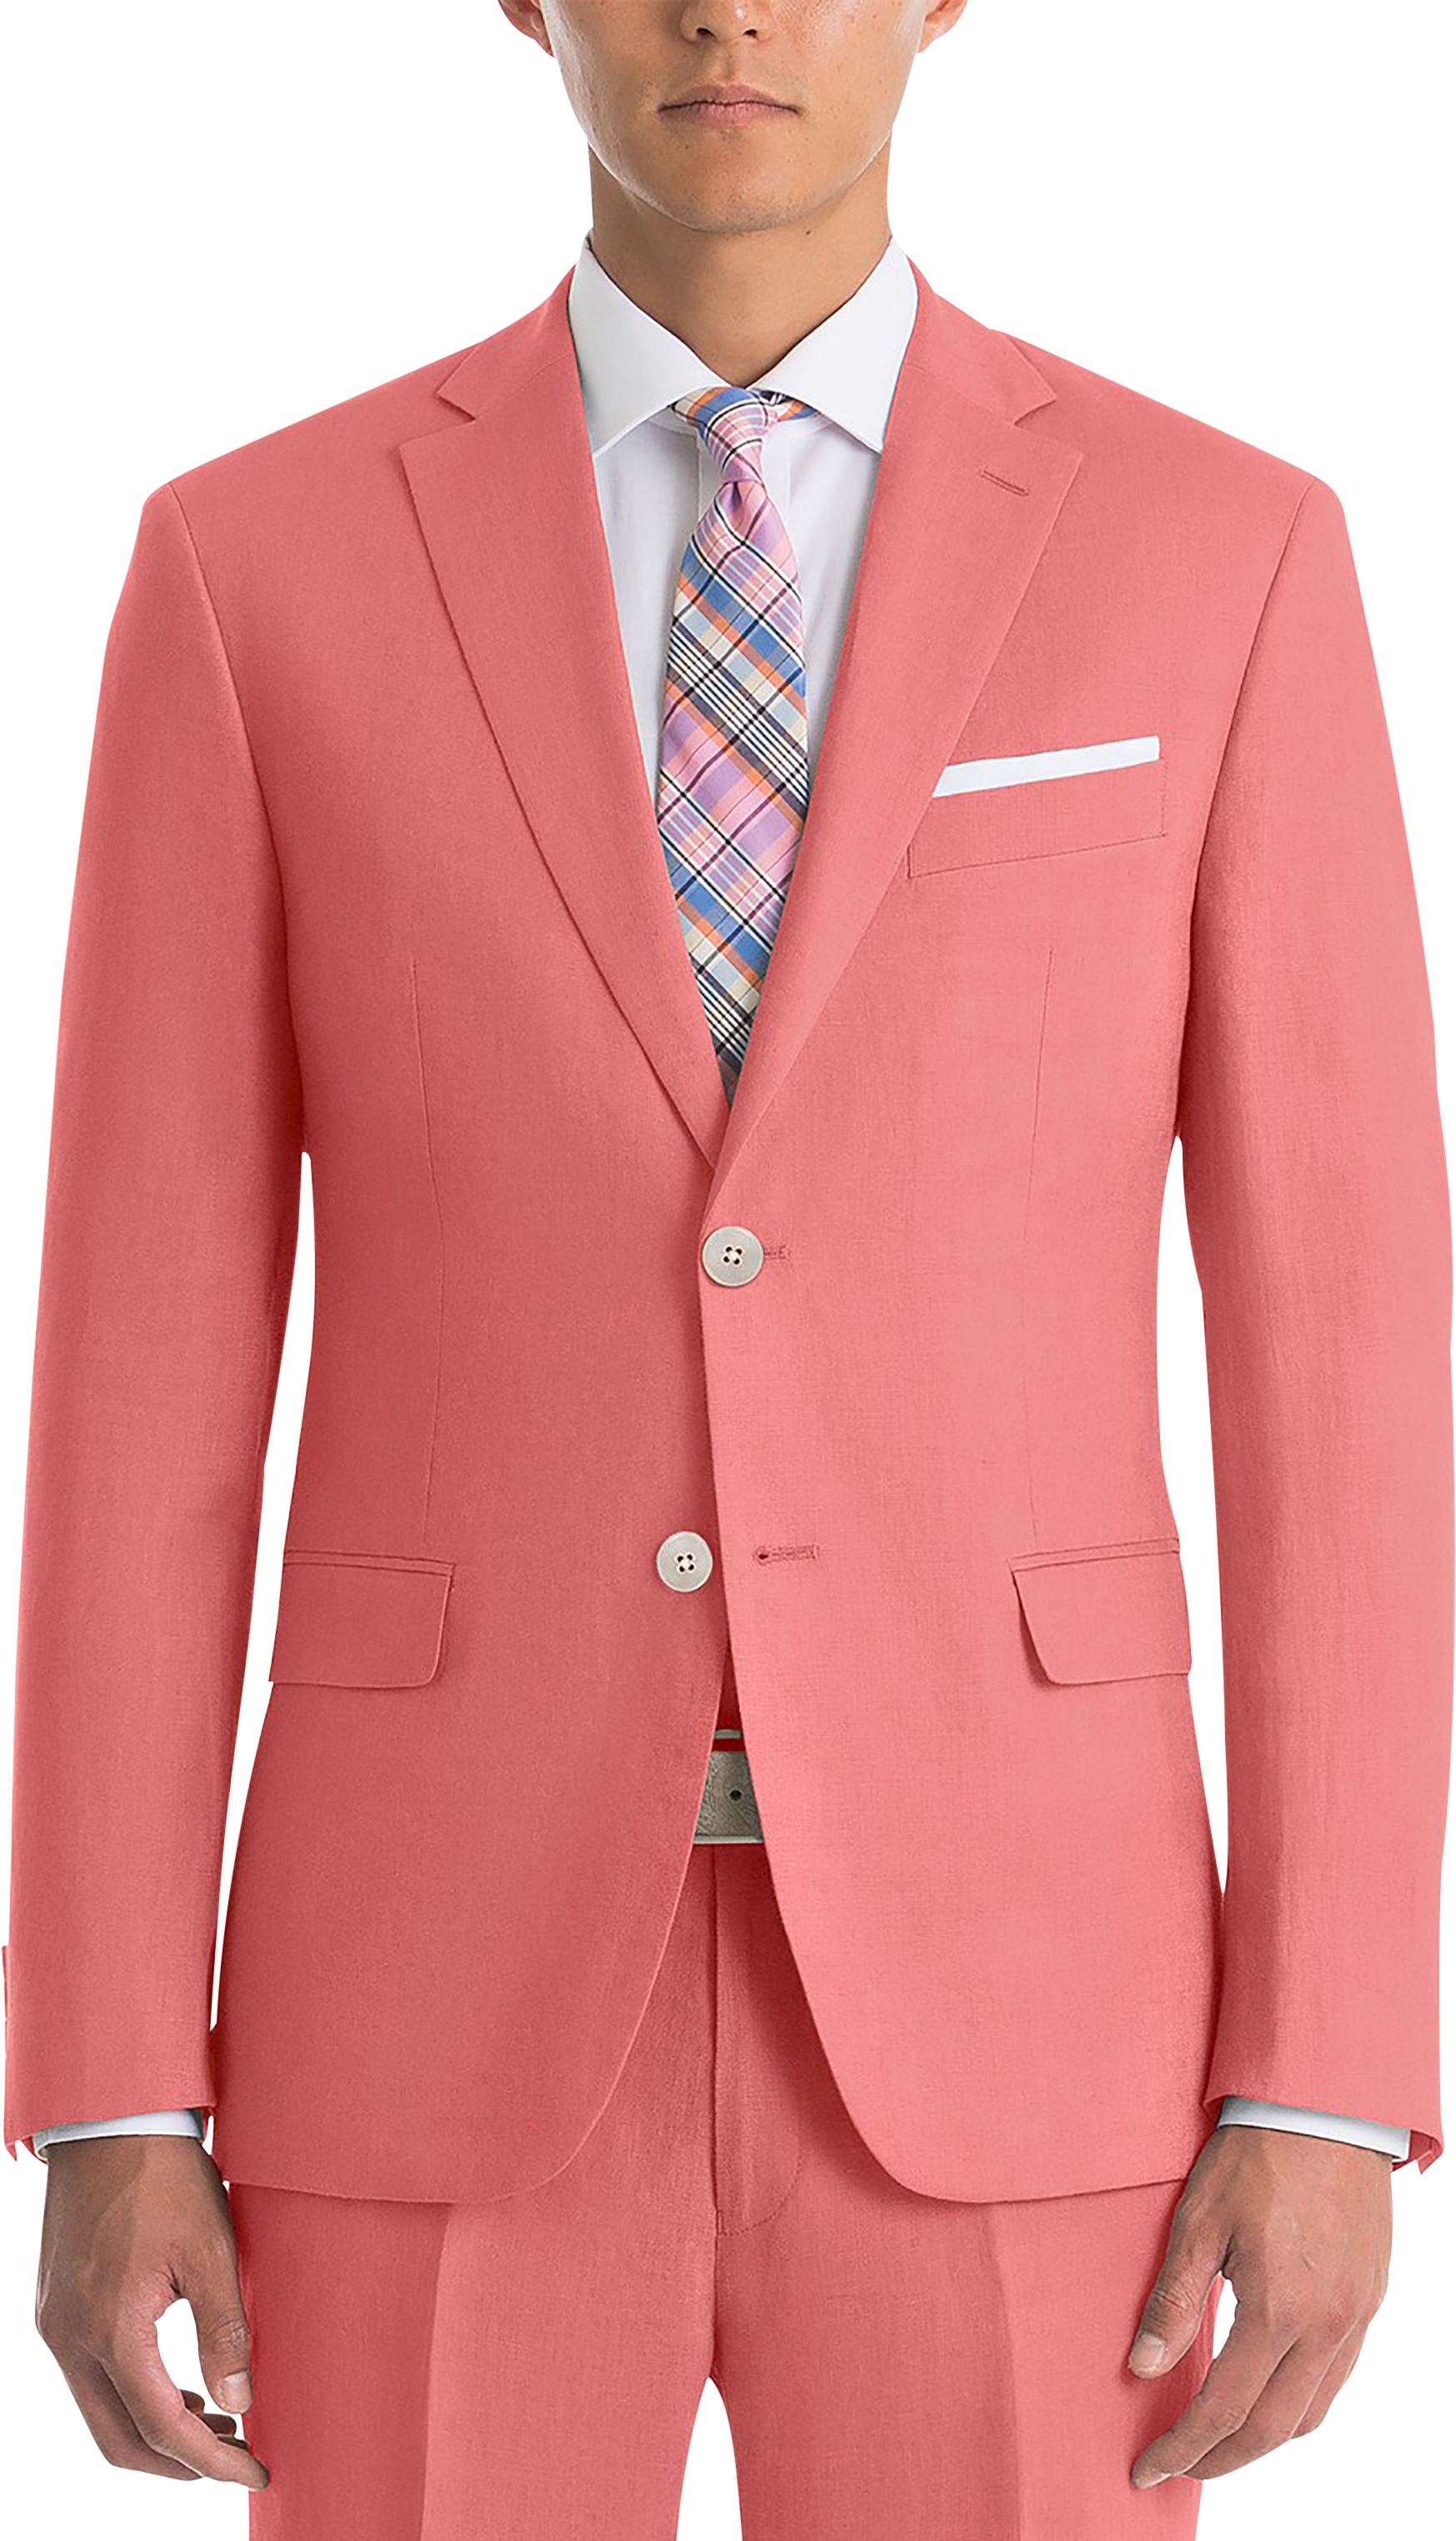 Lauren By Ralph Lauren Red Classic Fit Linen Suit Separates - Men's Suits |  Men's Wearhouse